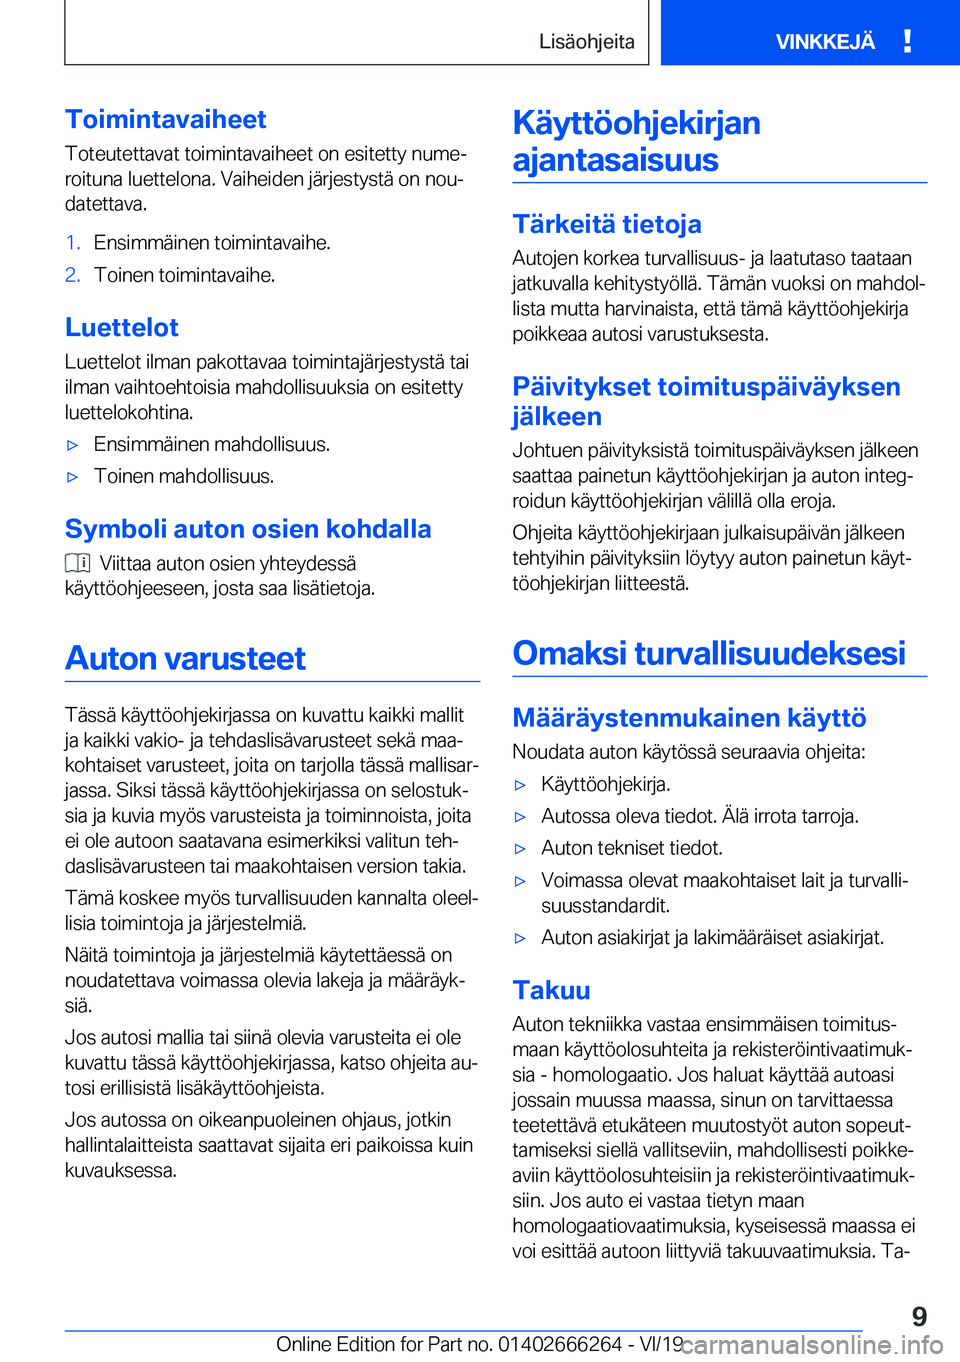 BMW 2 SERIES COUPE 2020  Omistajan Käsikirjat (in Finnish) �T�o�i�m�i�n�t�a�v�a�i�h�e�e�t�T�o�t�e�u�t�e�t�t�a�v�a�t��t�o�i�m�i�n�t�a�v�a�i�h�e�e�t��o�n��e�s�i�t�e�t�t�y��n�u�m�ej
�r�o�i�t�u�n�a��l�u�e�t�t�e�l�o�n�a�.��V�a�i�h�e�i�d�e�n��j�